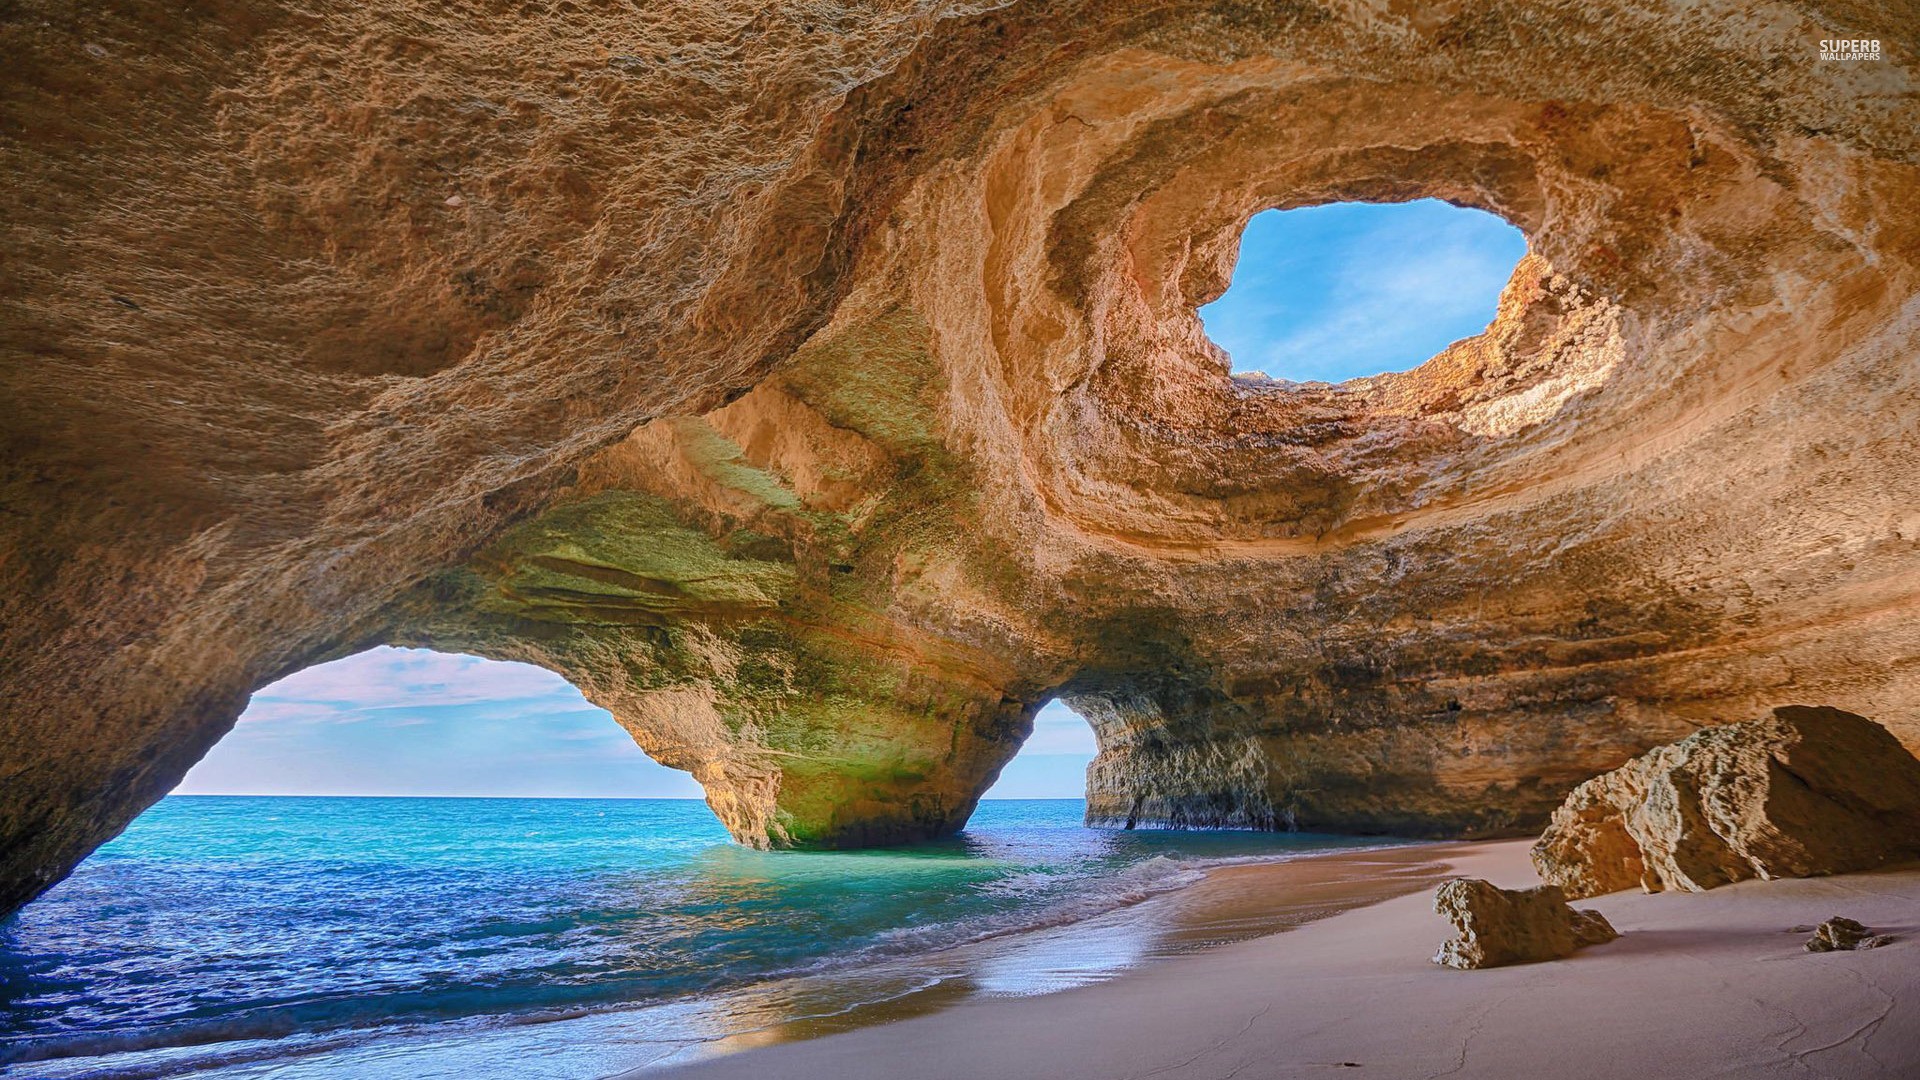 General 1920x1080 nature landscape sea beach cave Algarve (Portugal) Portugal